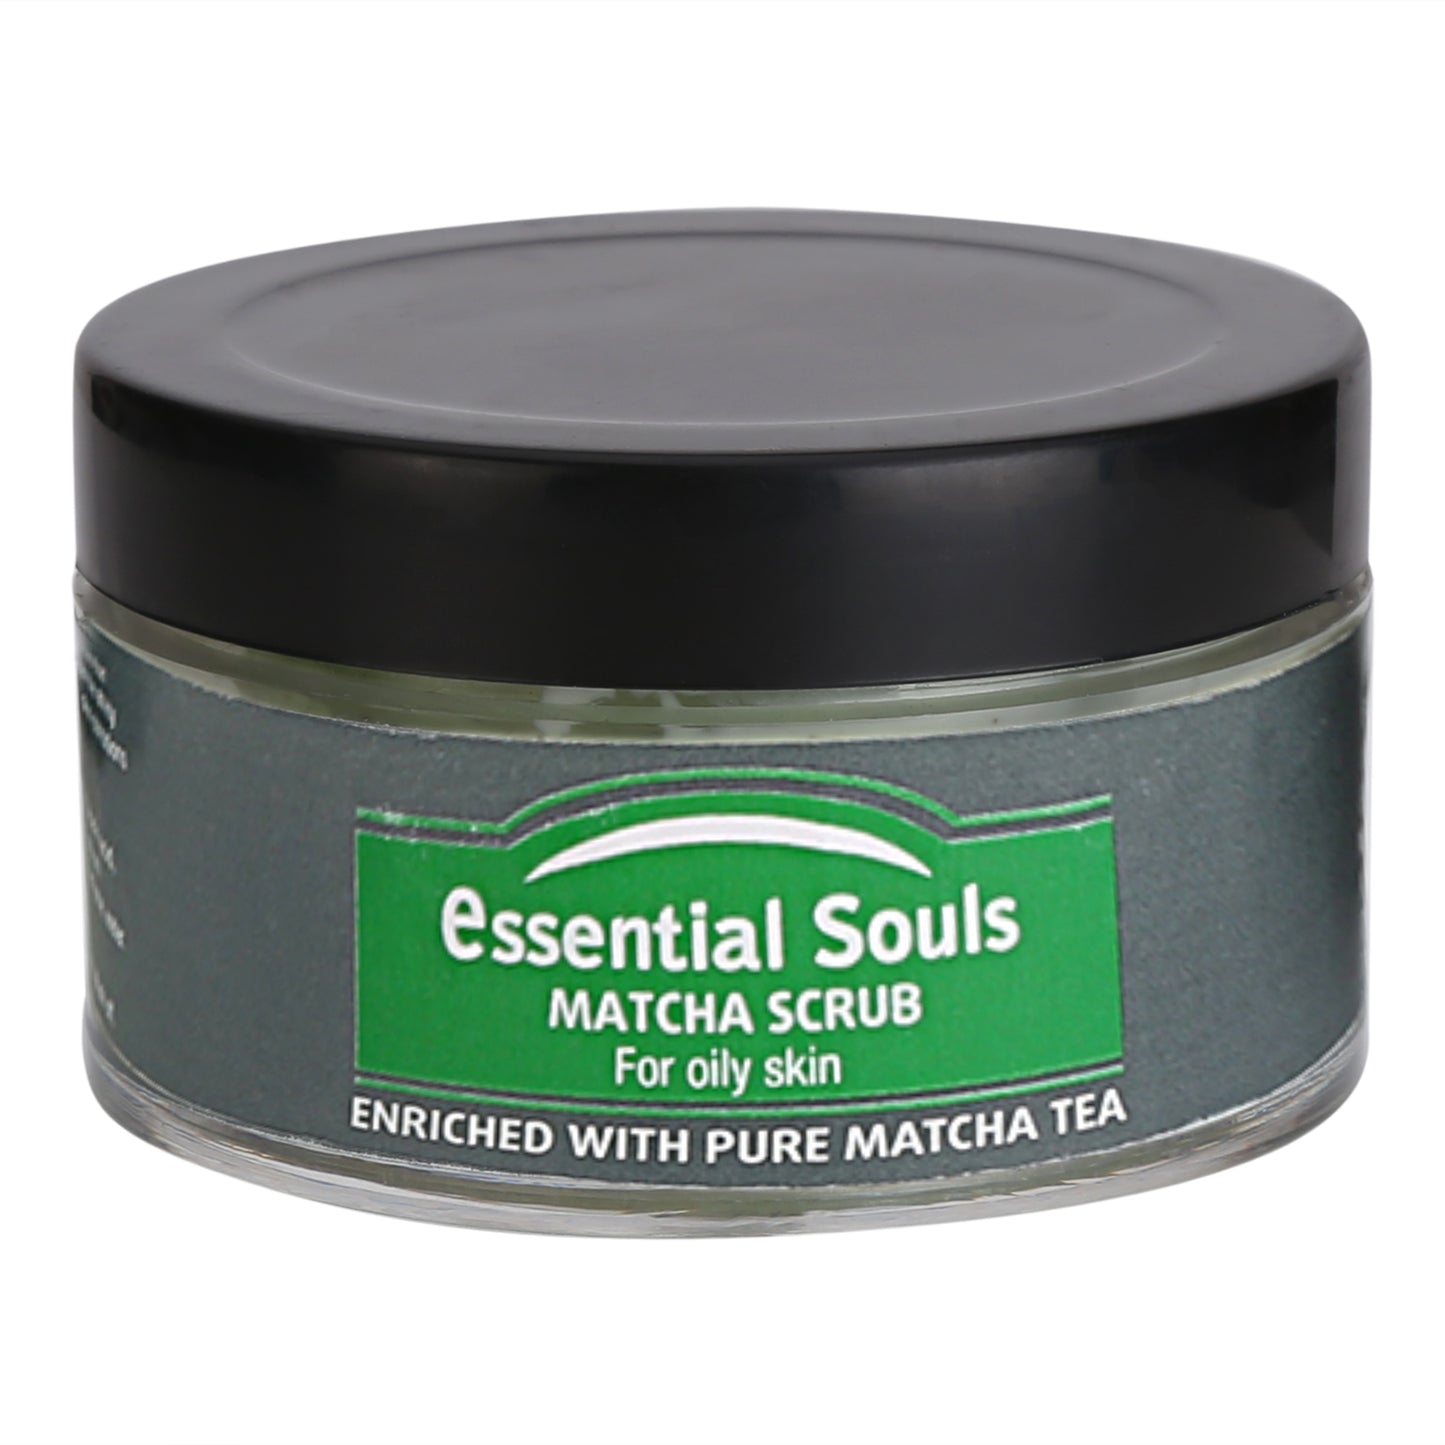 Essential Souls Matcha Scrub - 50g